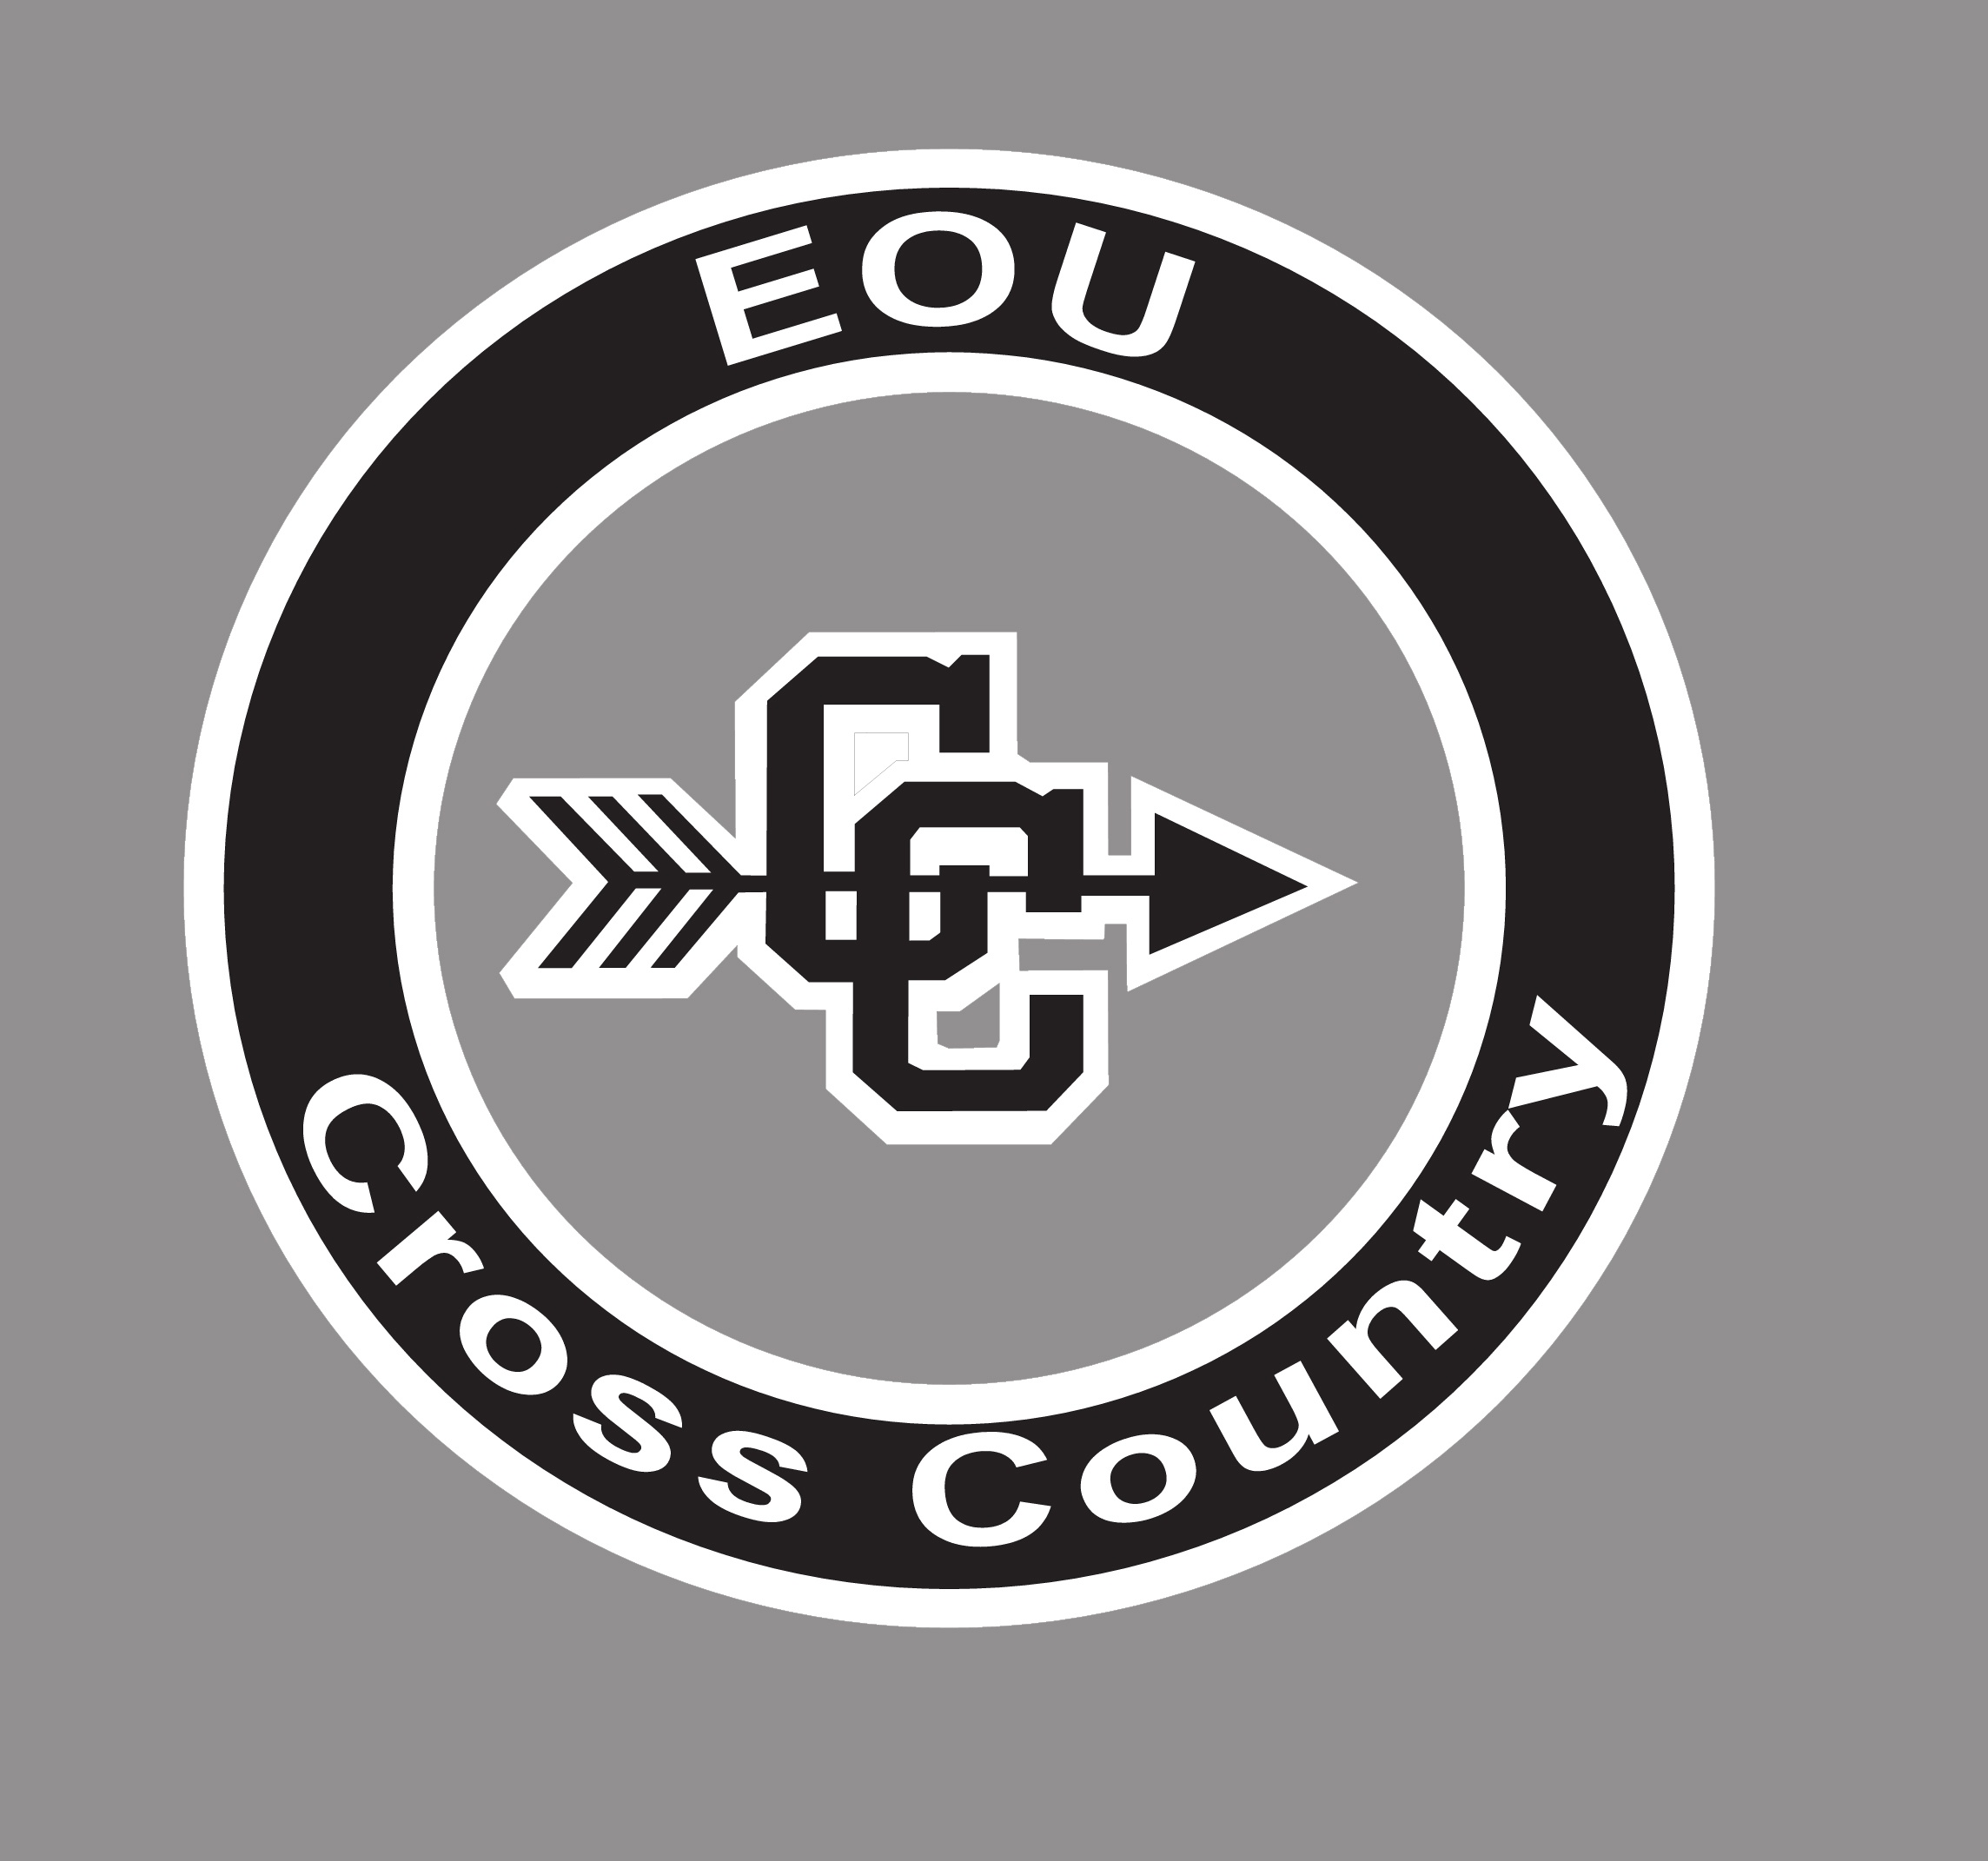 cc logo full